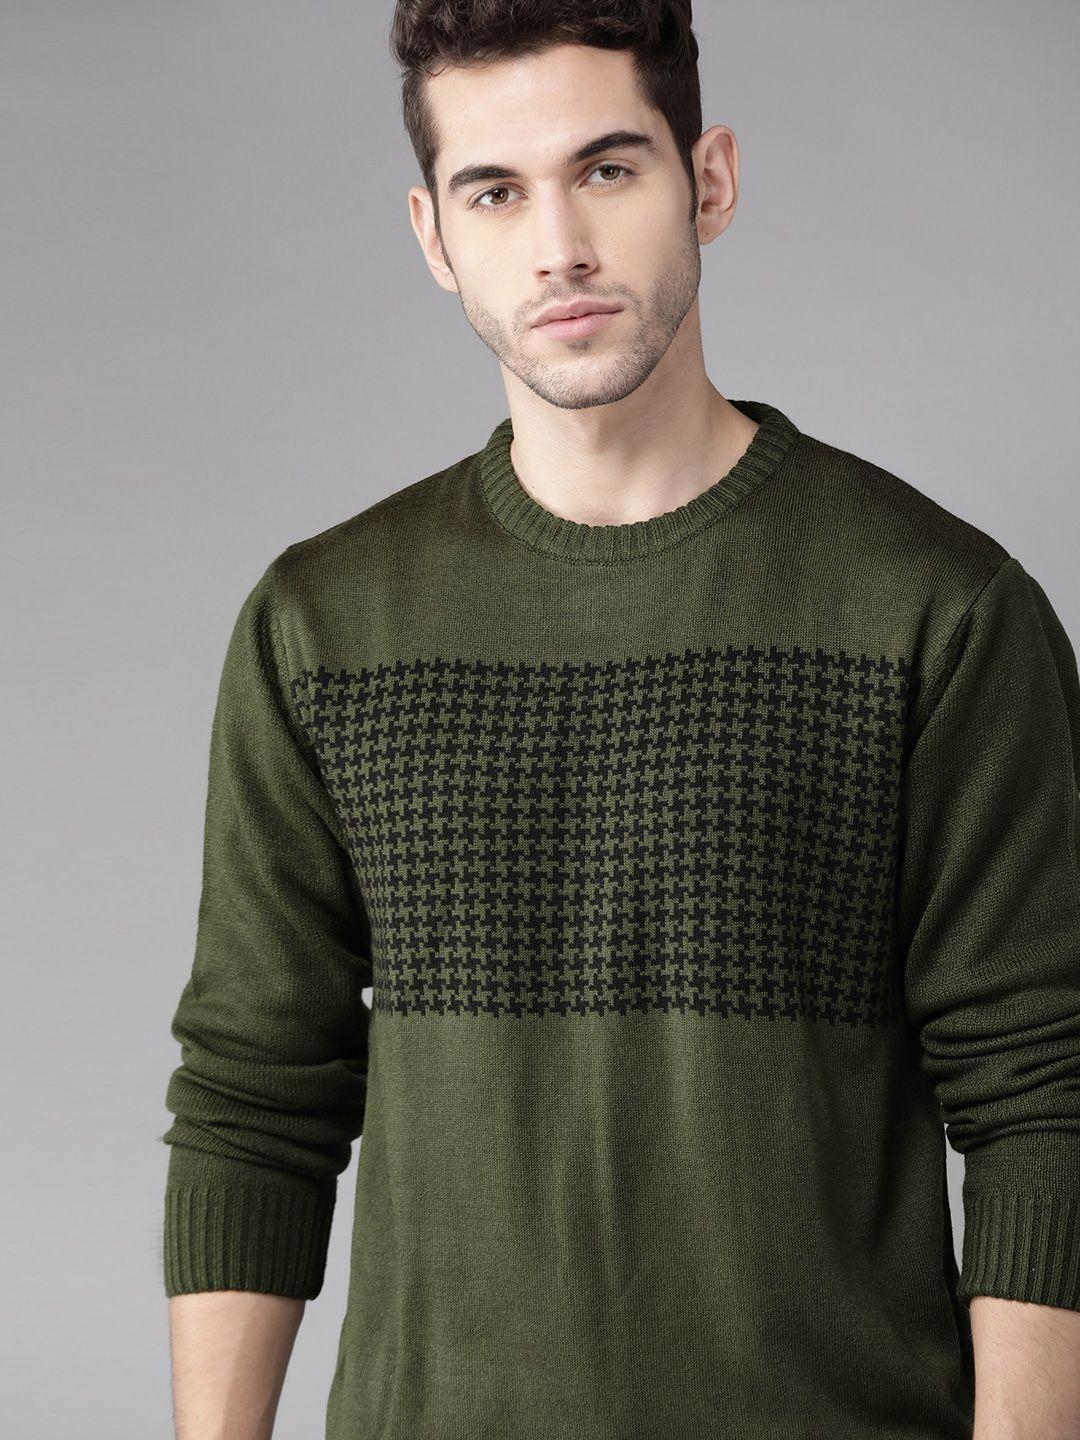 roadster men olive green & black houndstooth pattern pullover sweater